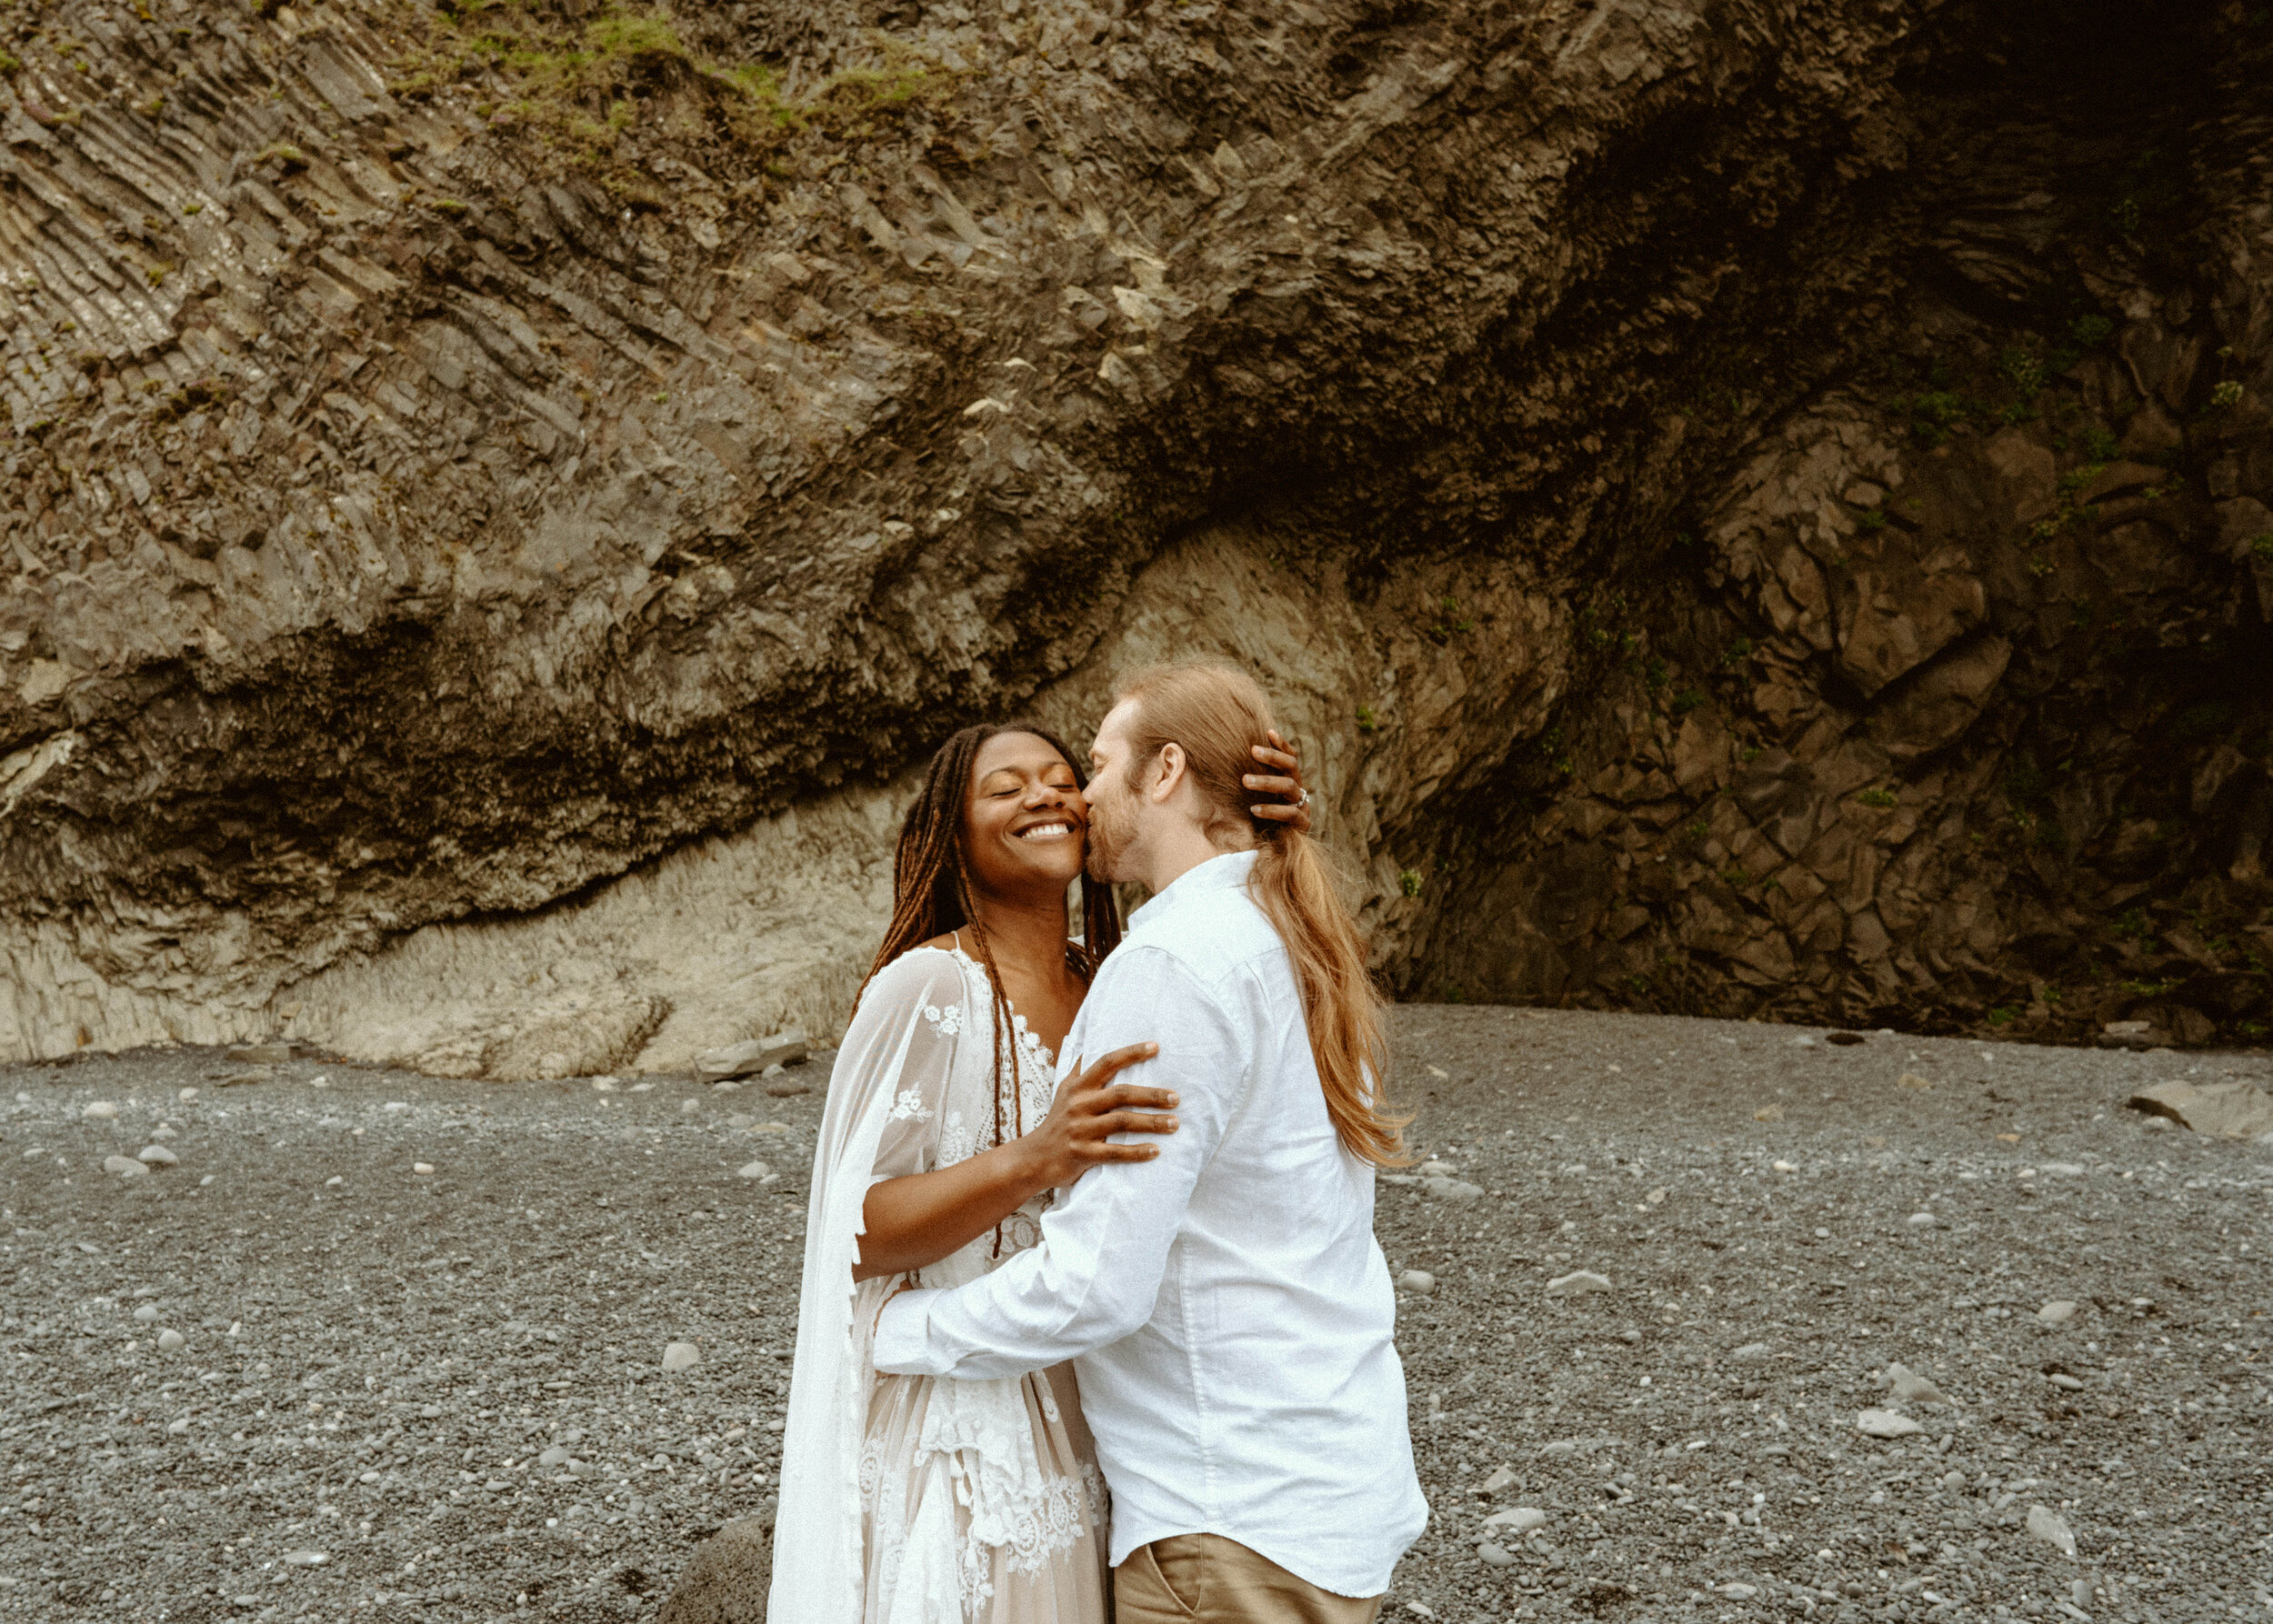  Iceland elopement photographer | Destination Elopement in Iceland | Reynisfara Black Sand Beach wedding | Iceland Waterfall adventure elopement | adventure couple 